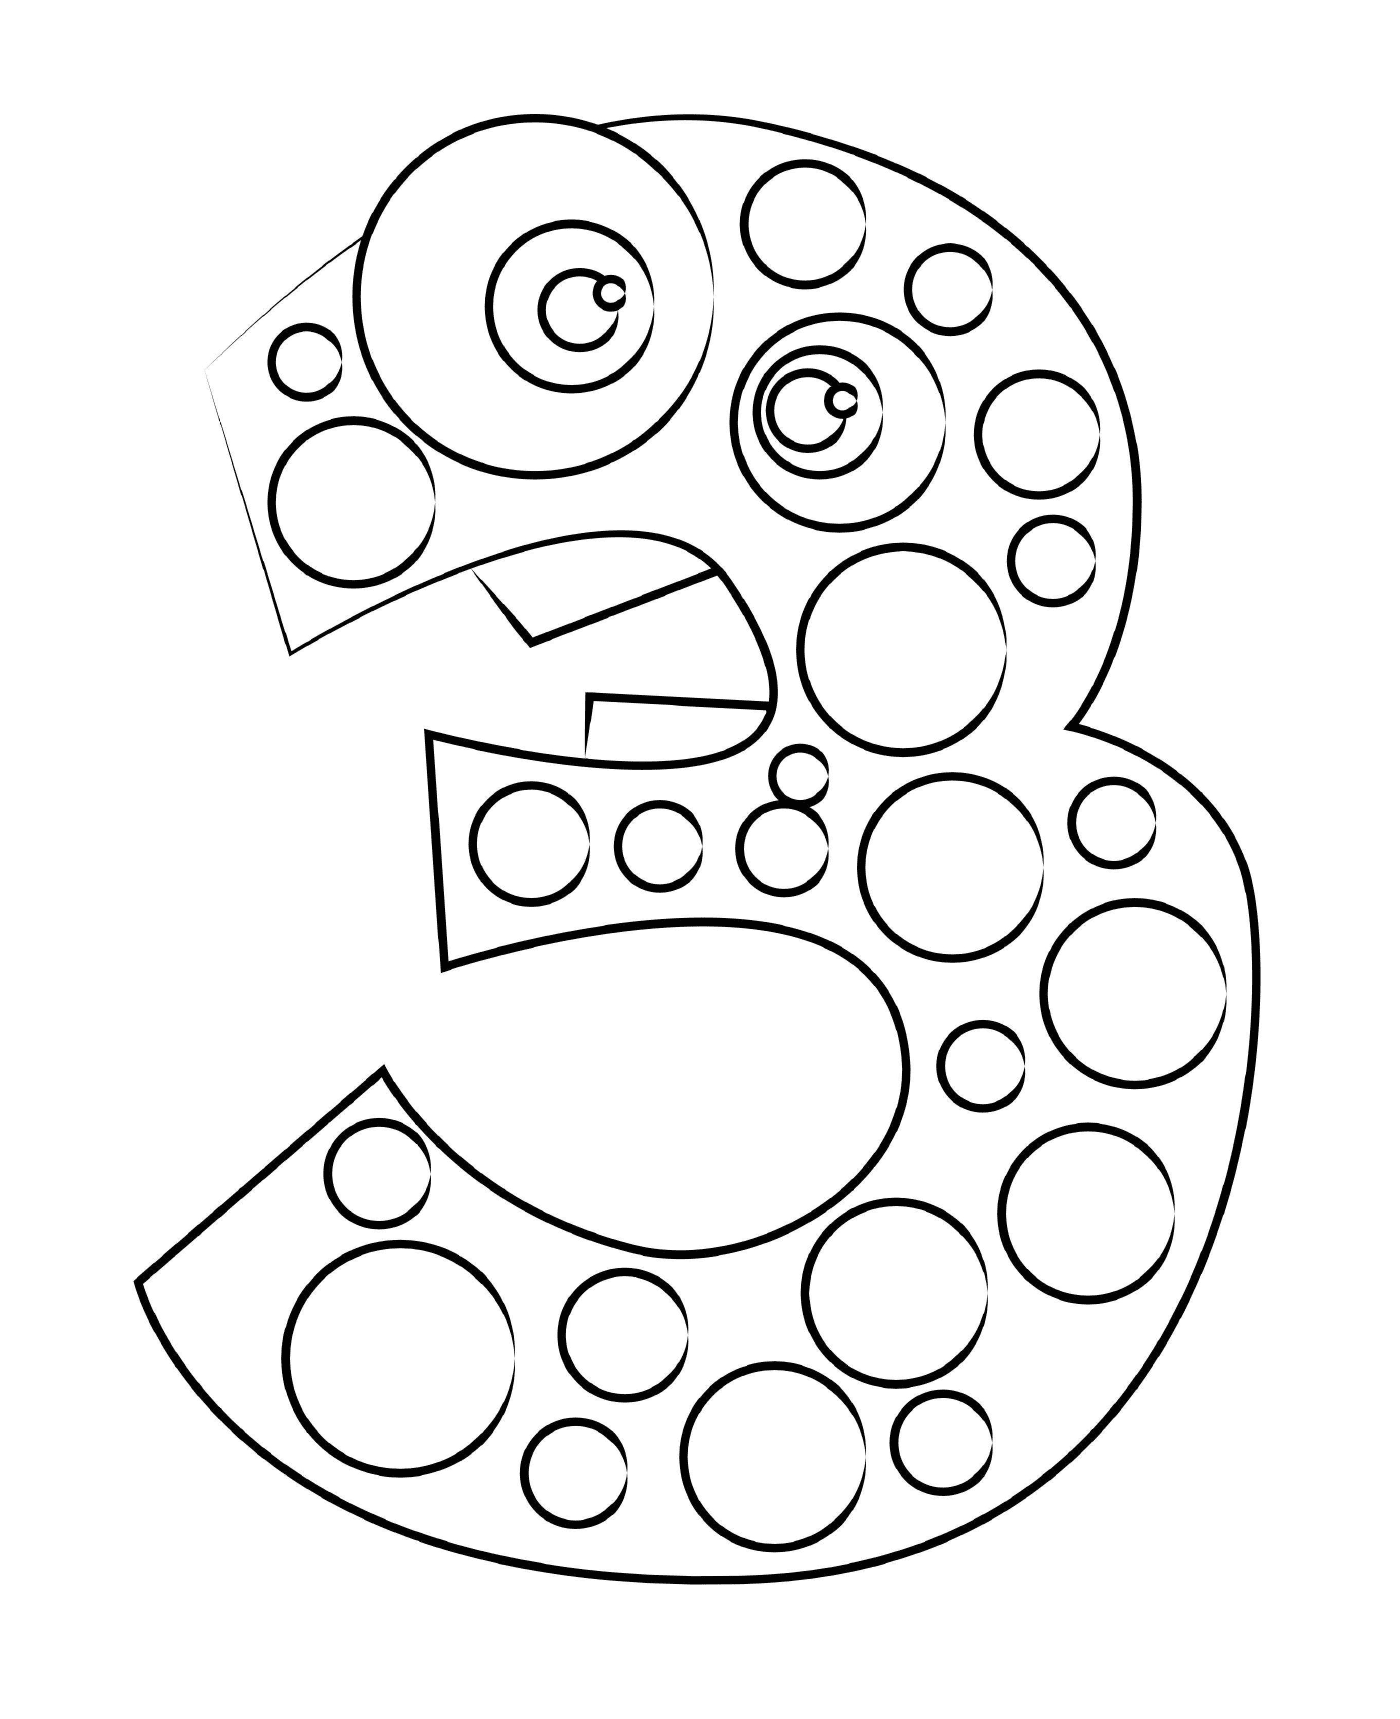  Número três composto de círculos 